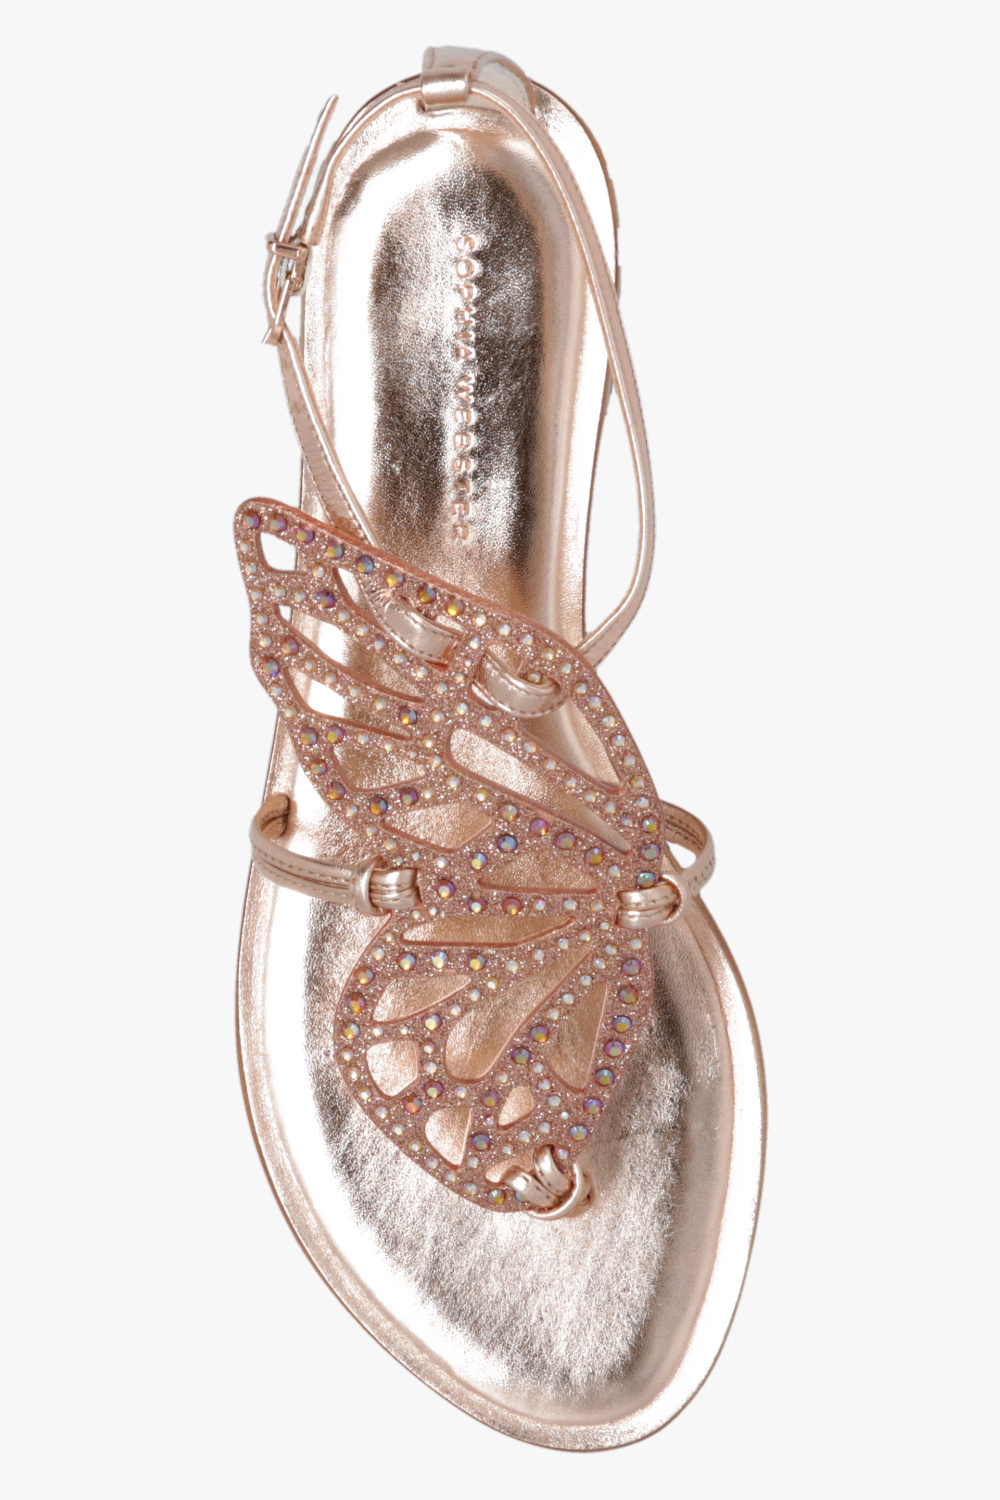 Sophia Webster ‘Butterfly’ heeled sandals